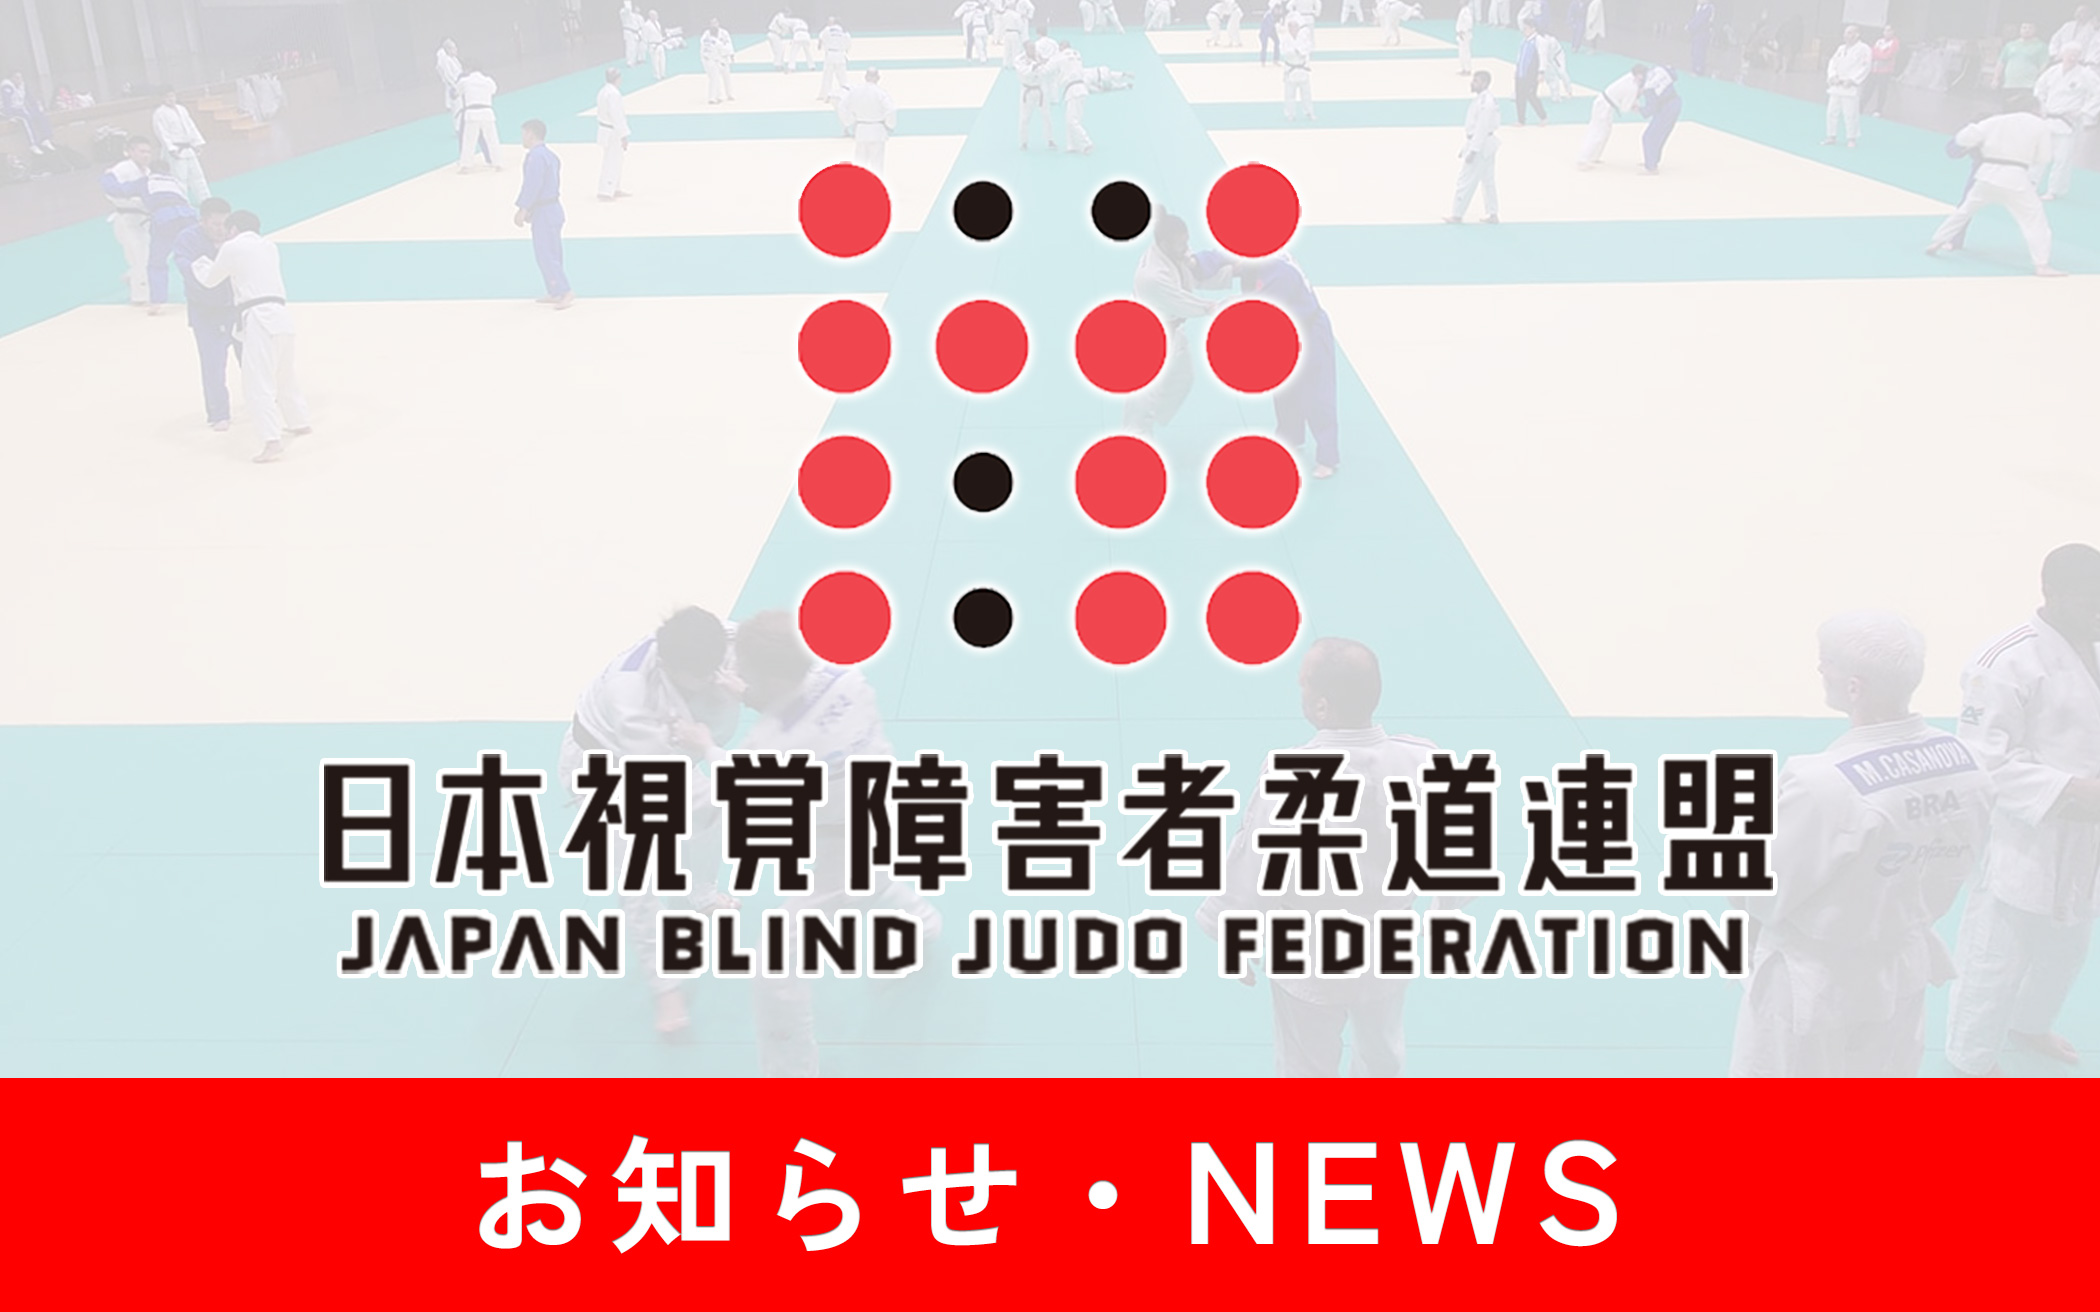 IBSA Judo 2日目 YouTube 配信